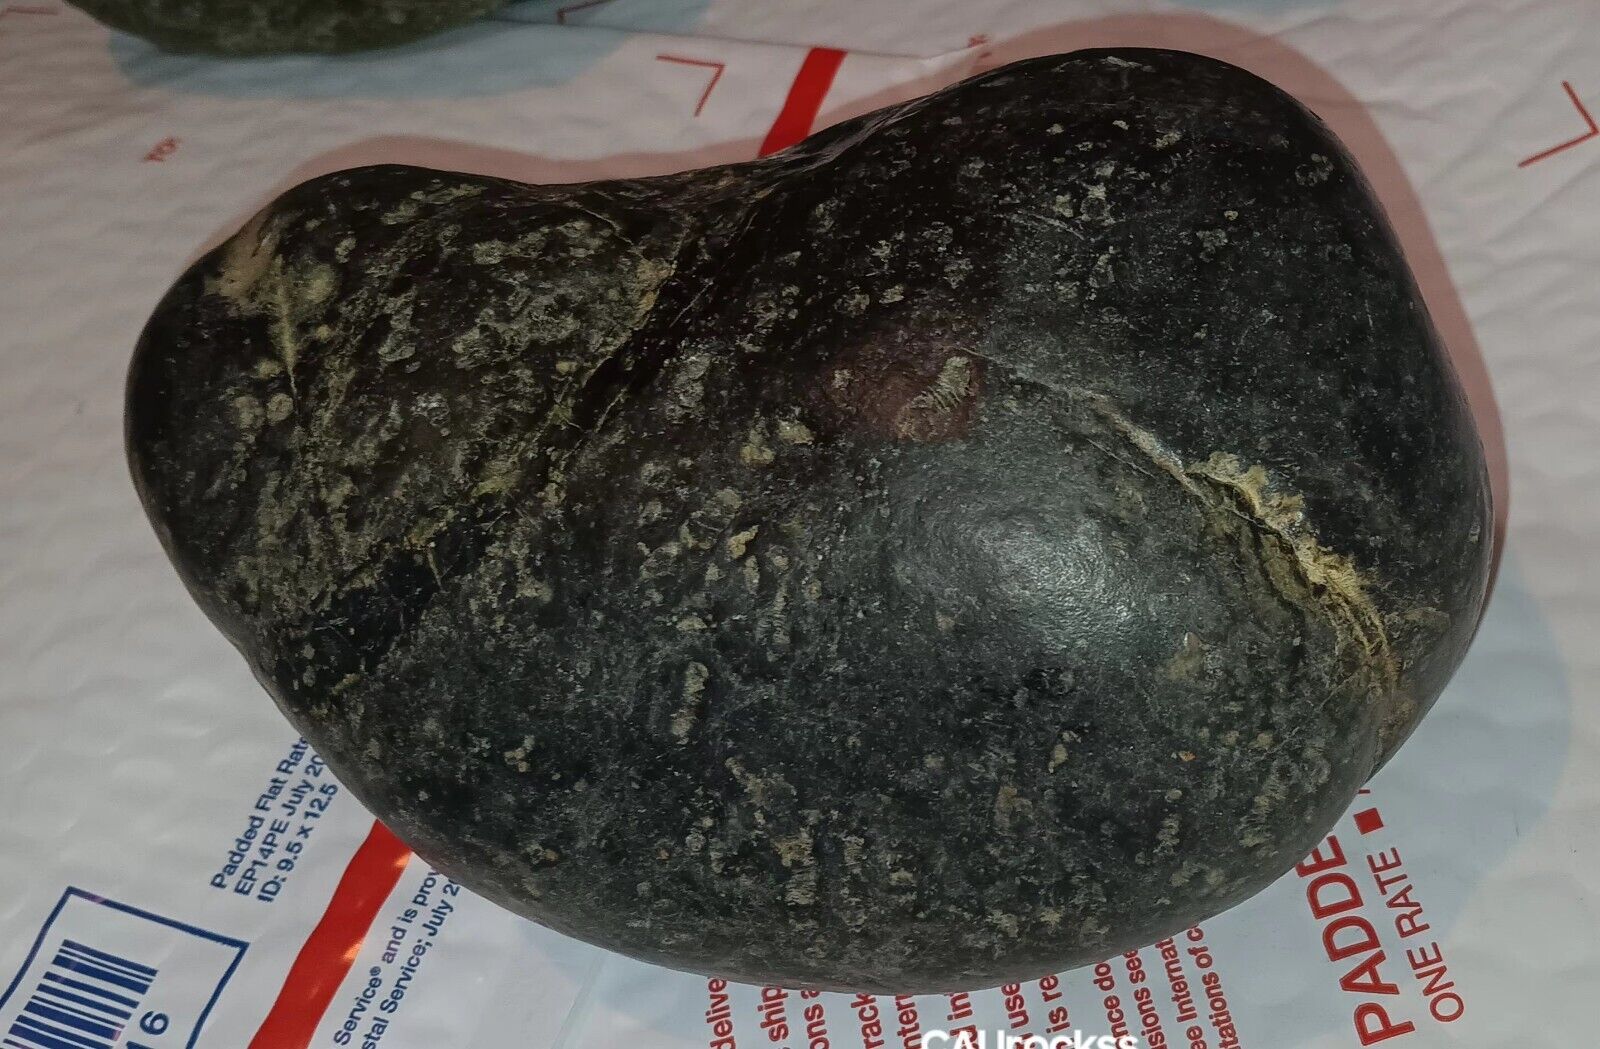 Grade a whole Nephrite Jade rock from California